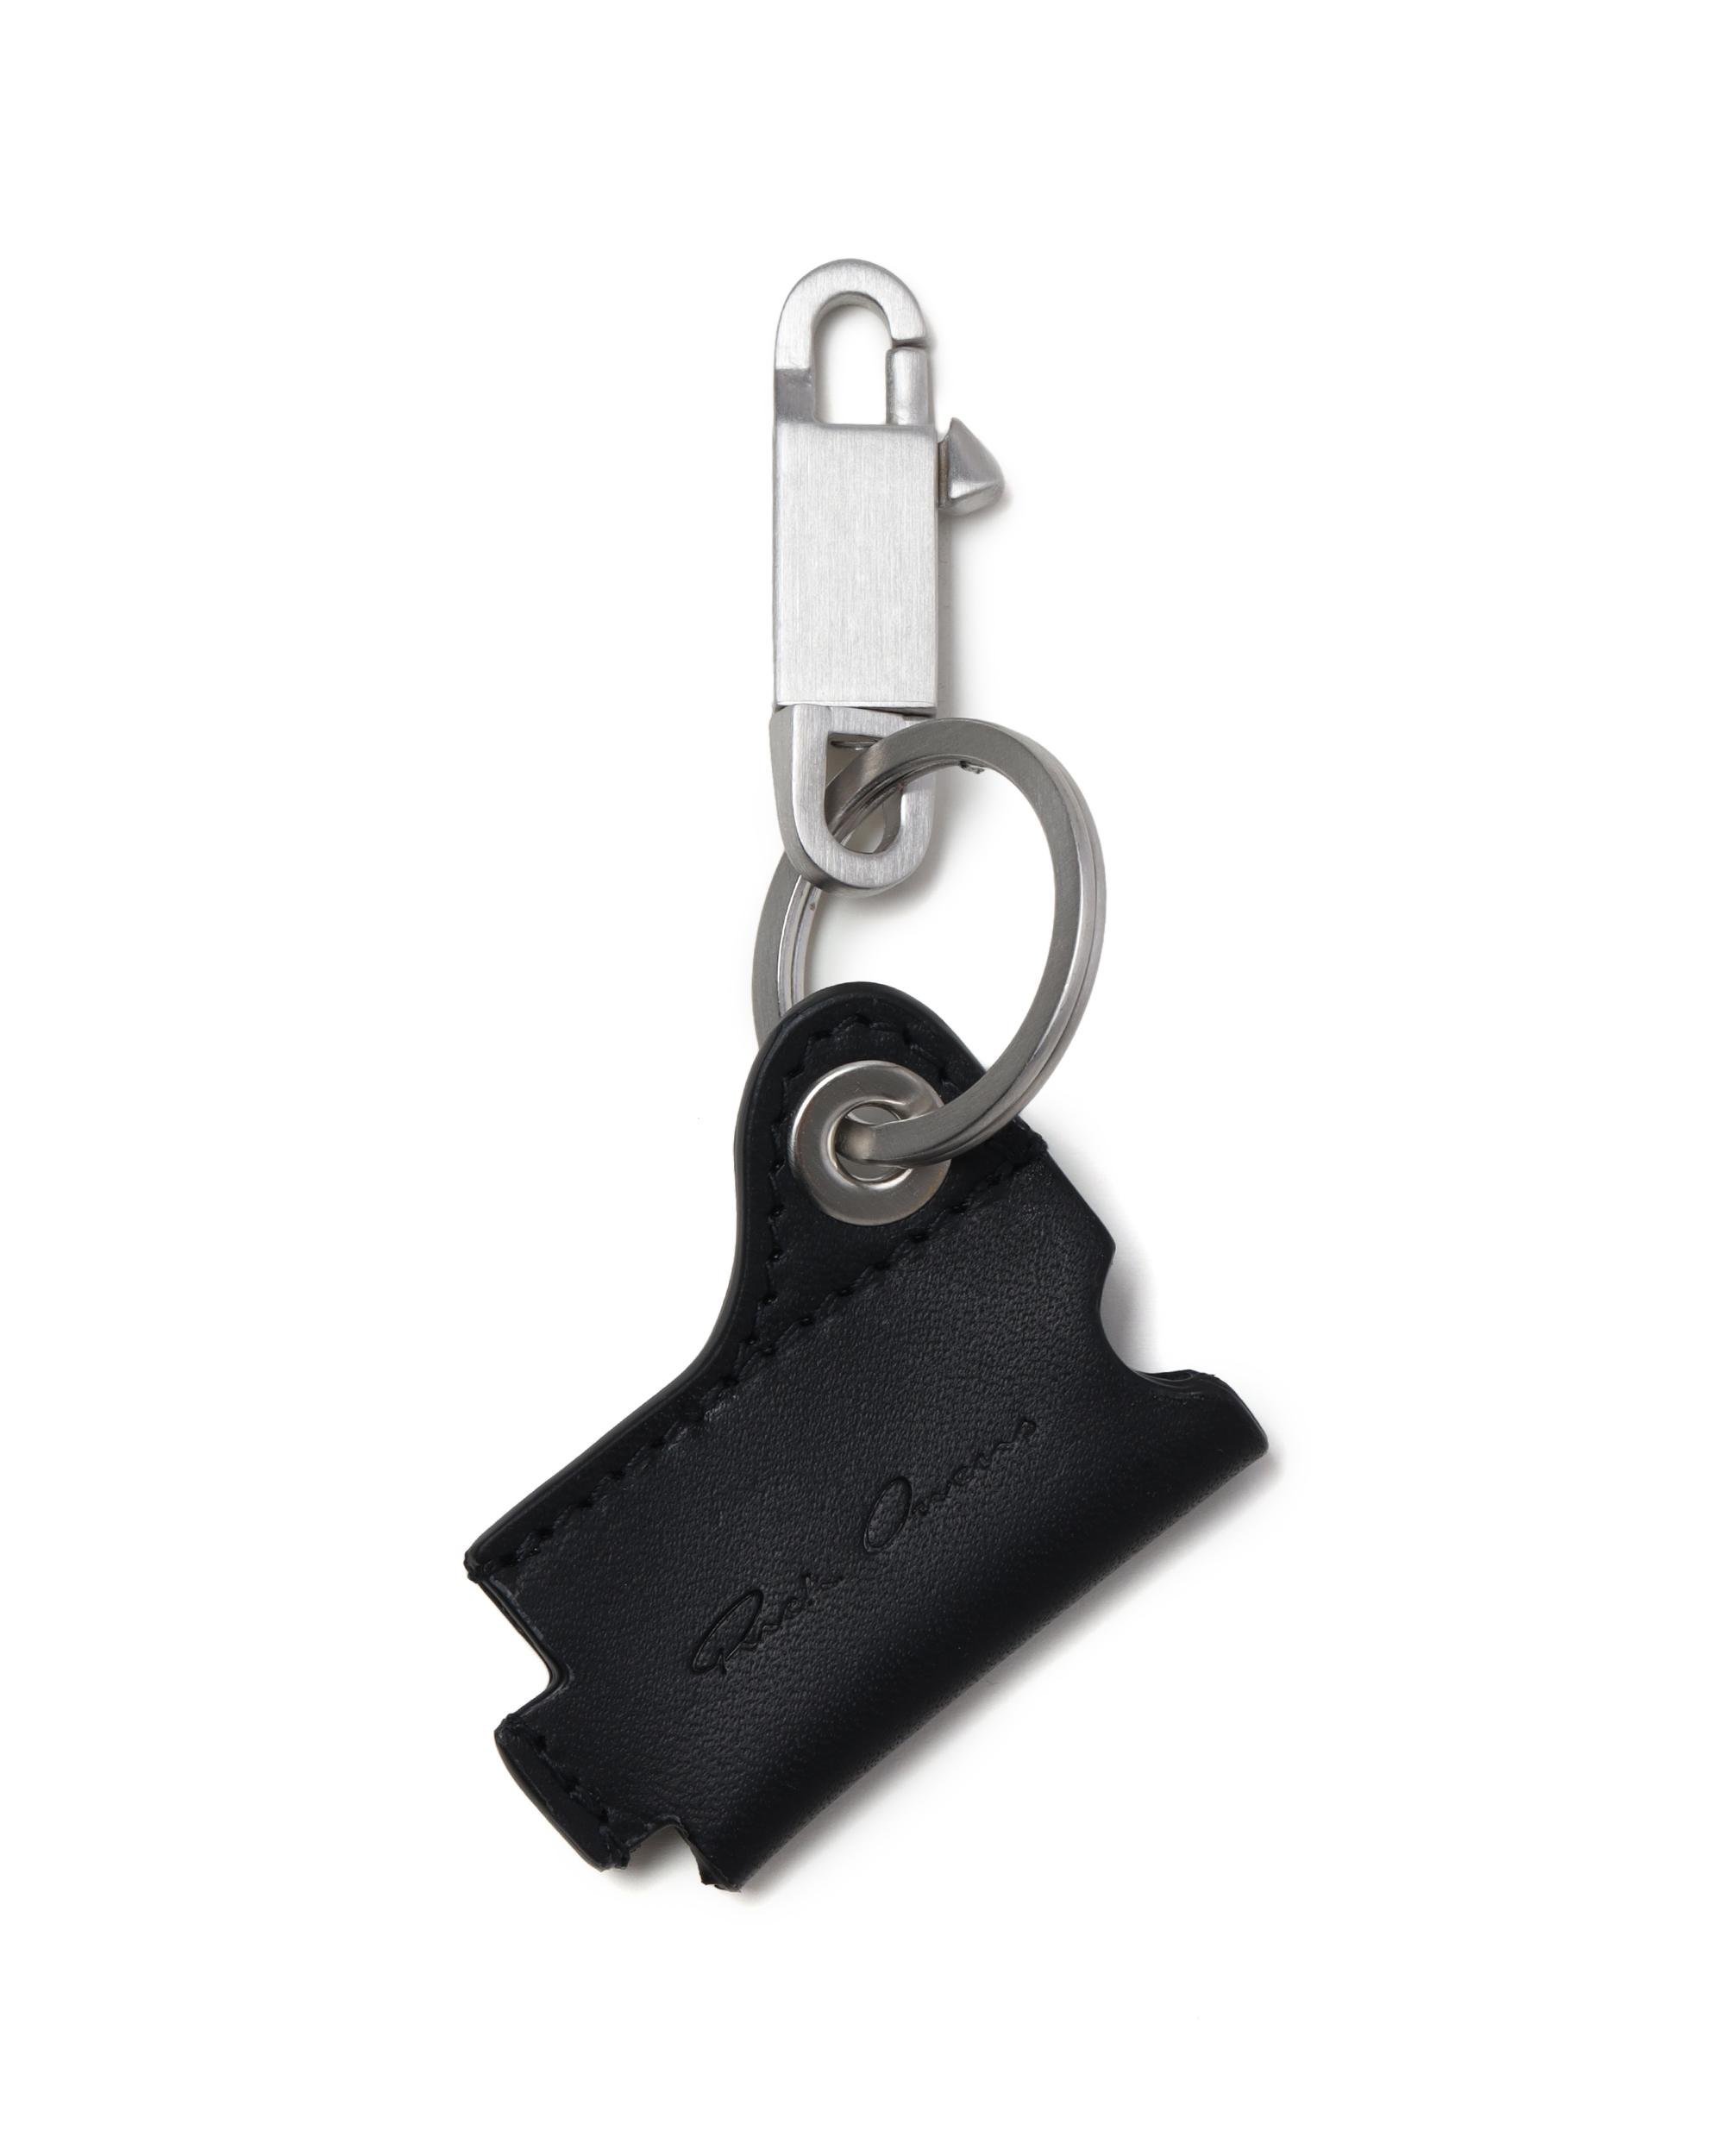 Lighter holder keychain by RICK OWENS